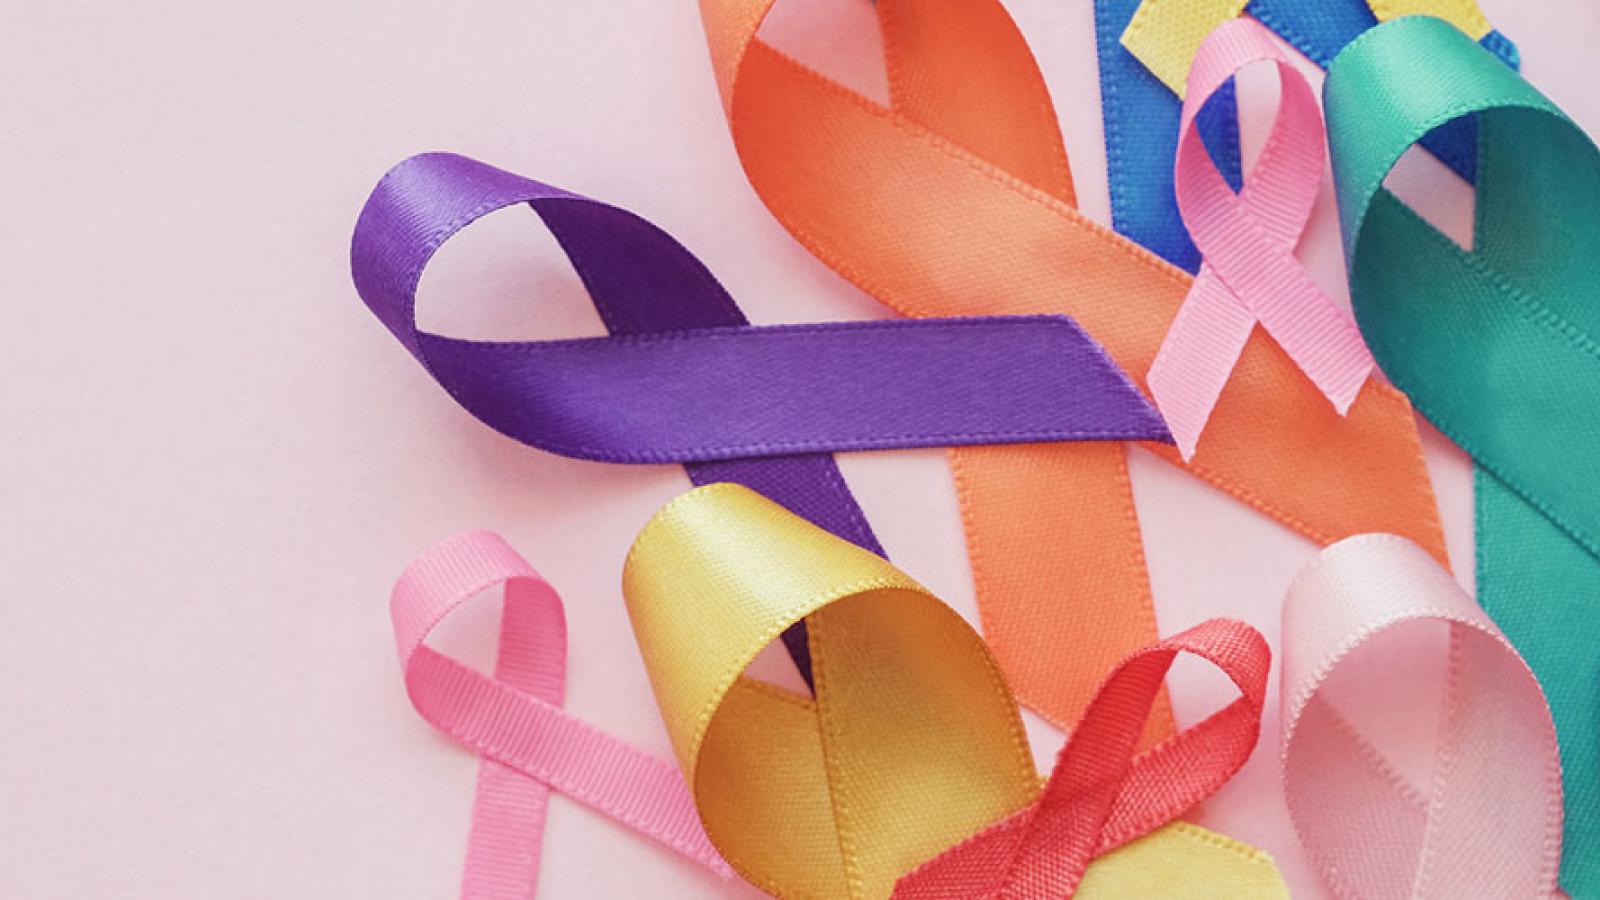 It’s National Cancer Survivor Day